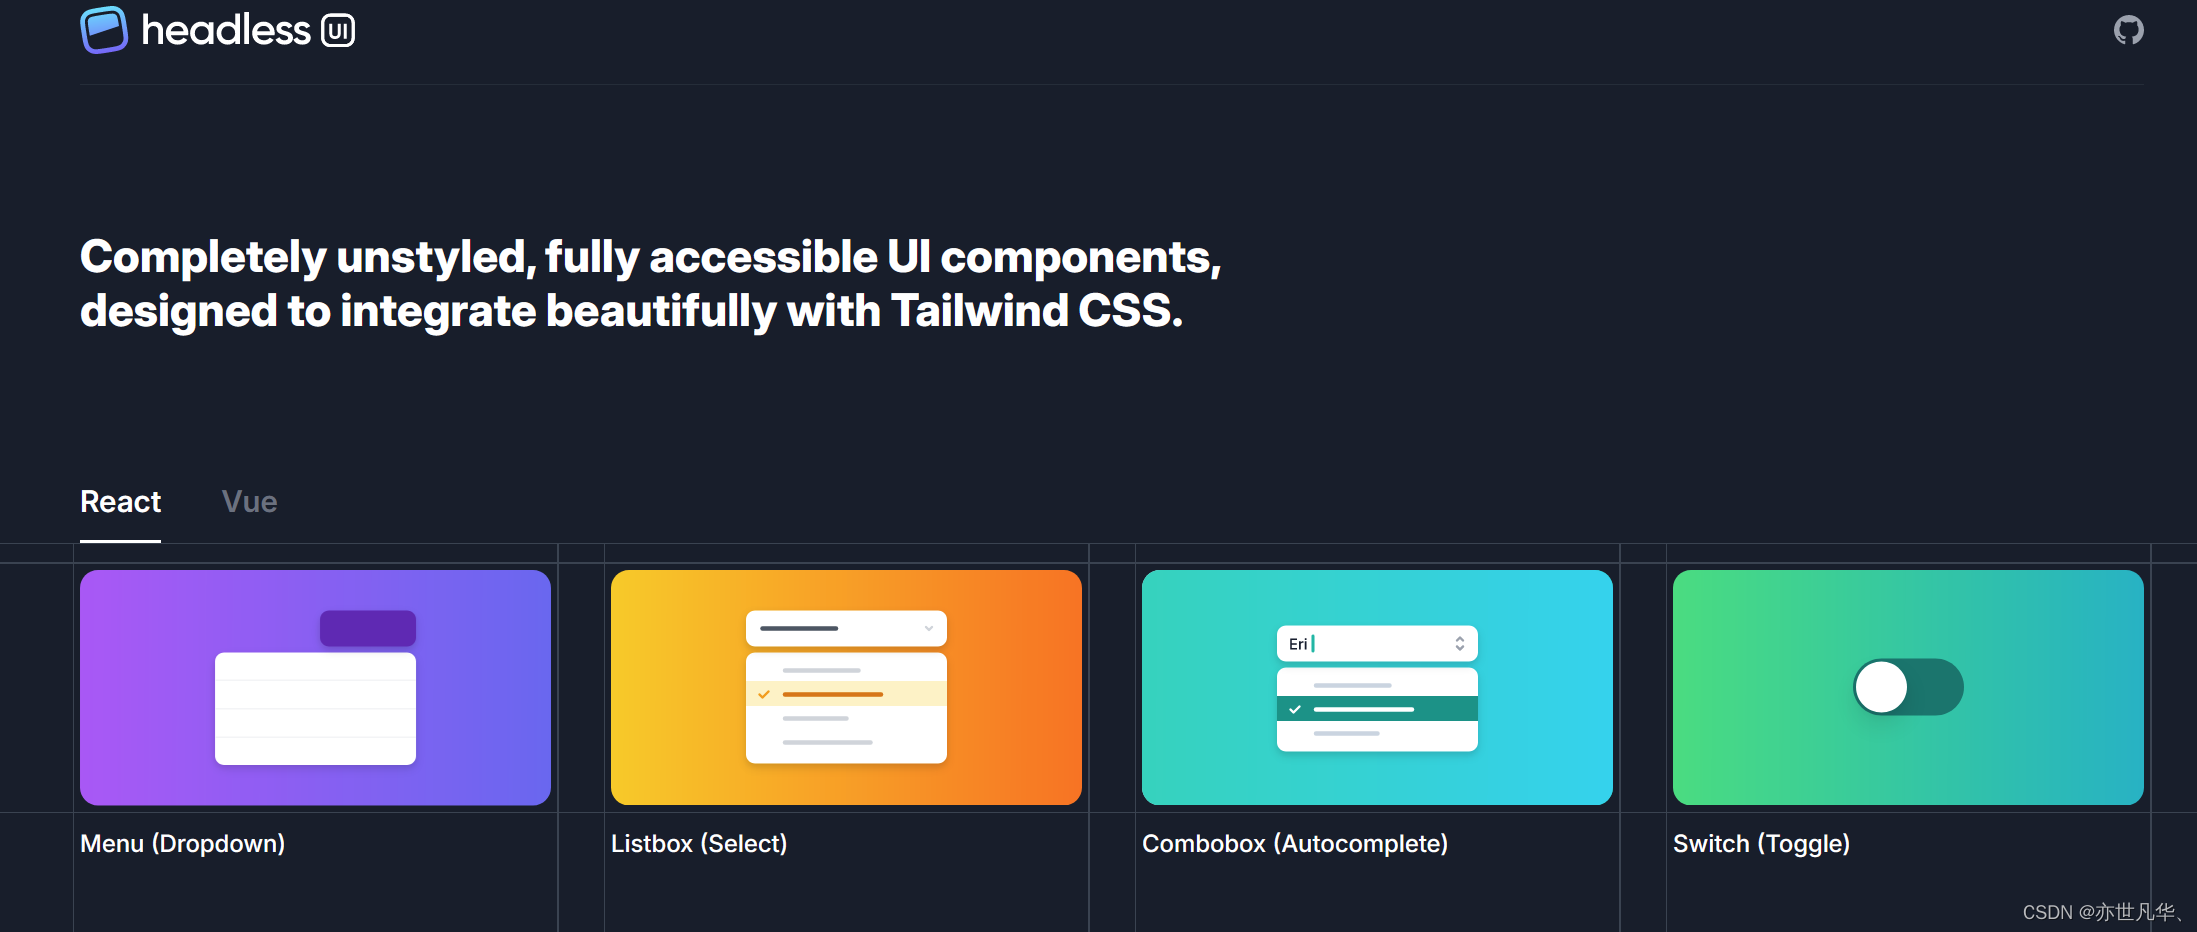 Vue--》深入学习Tailwind CSS掌握优雅而高效的前端样式开发